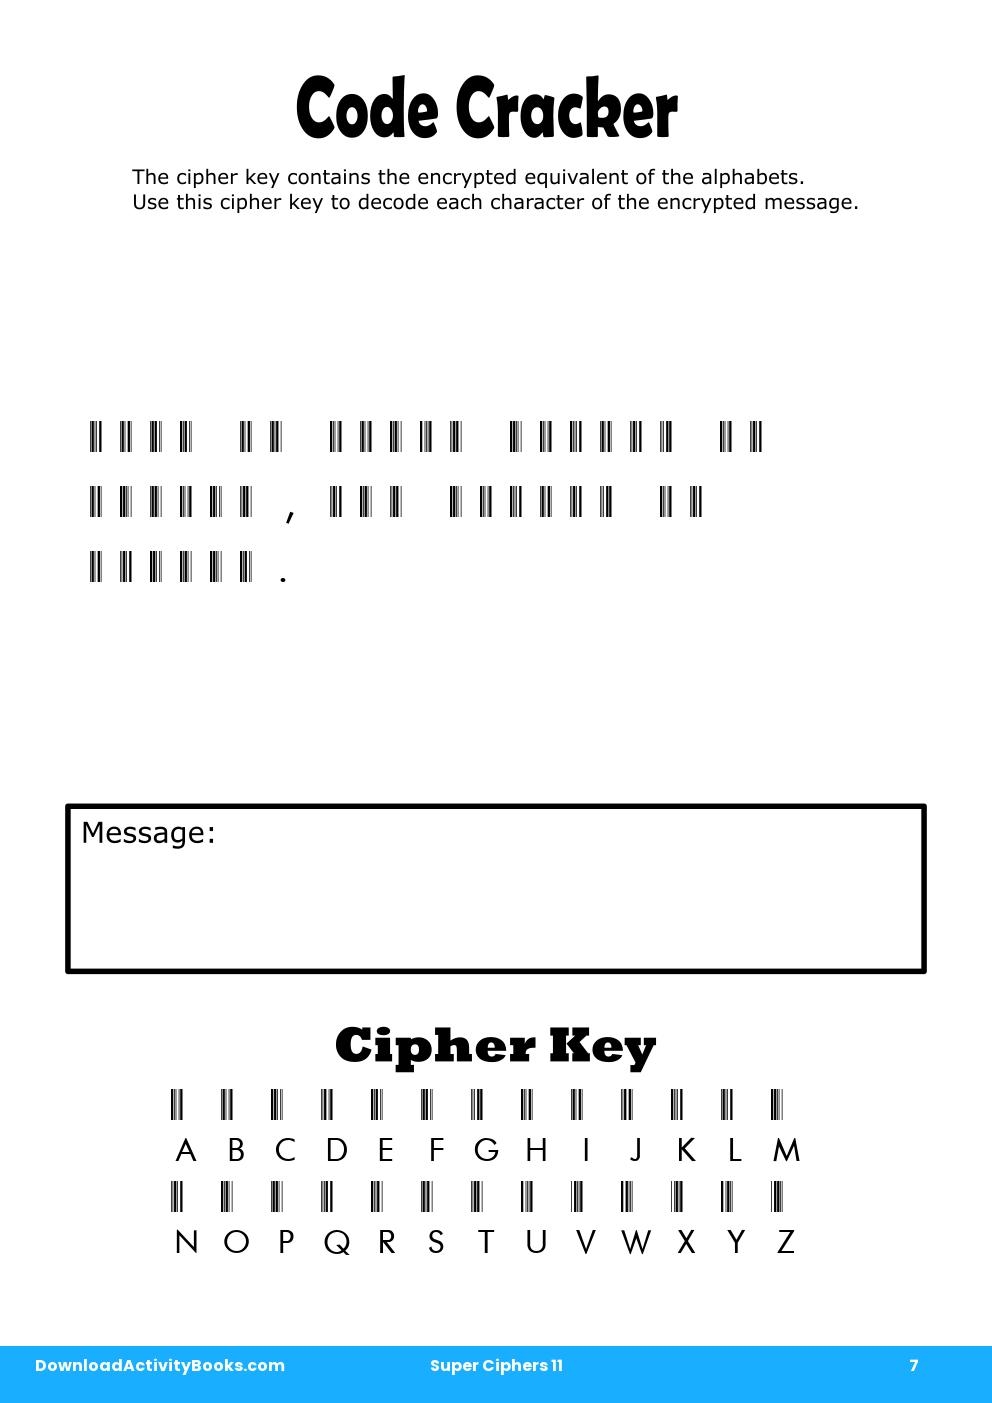 Code Cracker in Super Ciphers 11